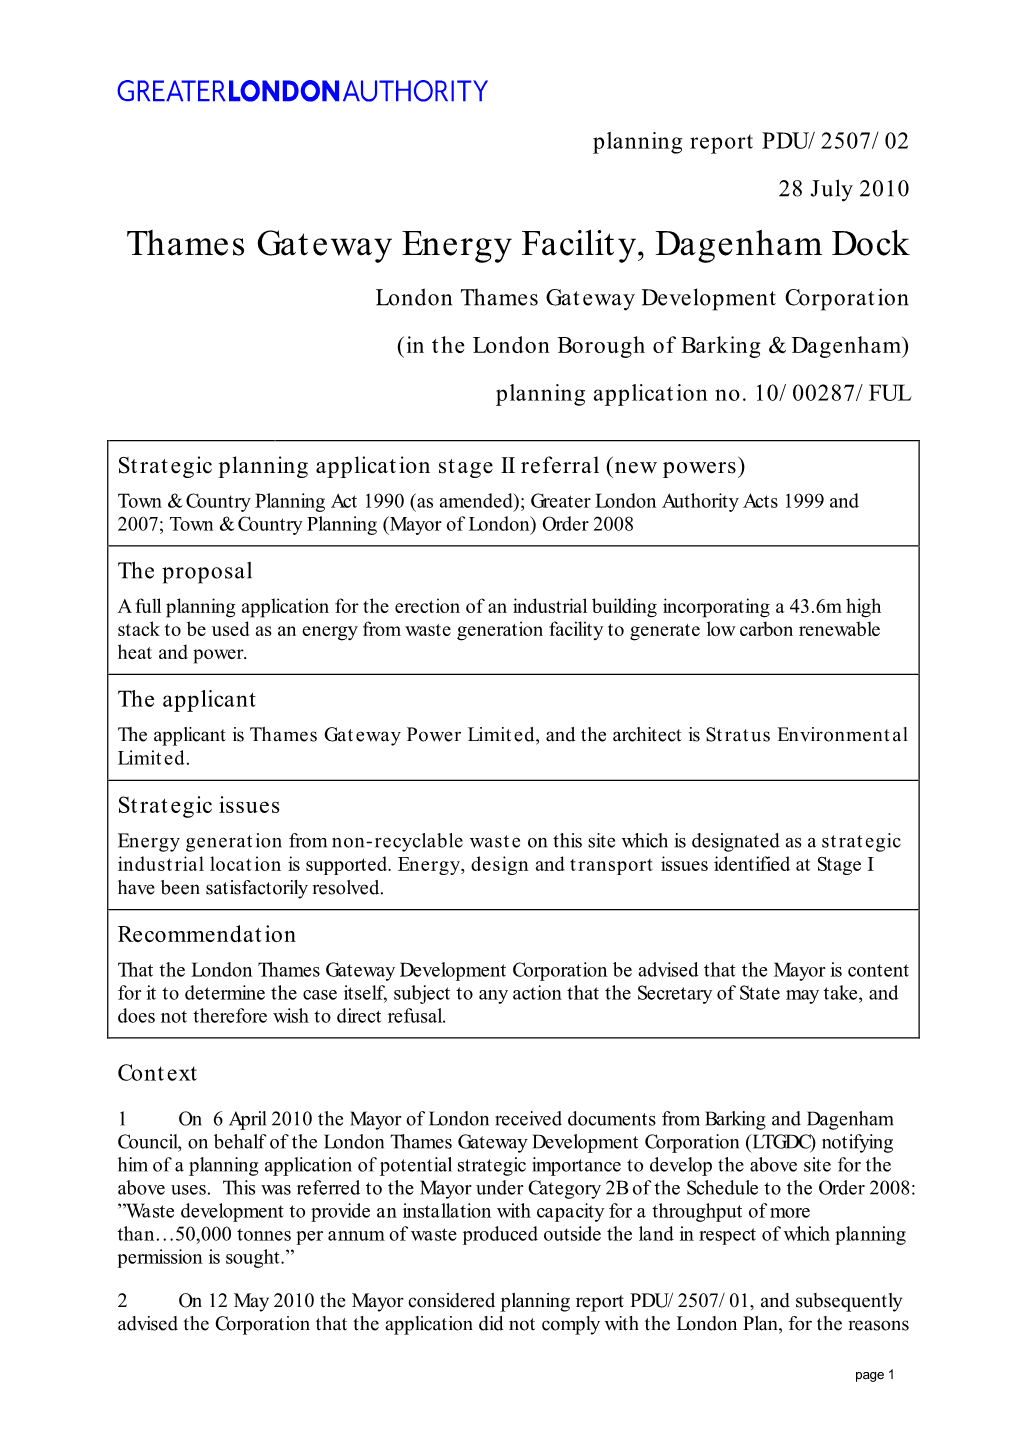 Thames Gateway Energy Facility, Dagenham Dock London Thames Gateway Development Corporation (In the London Borough of Barking & Dagenham) Planning Application No